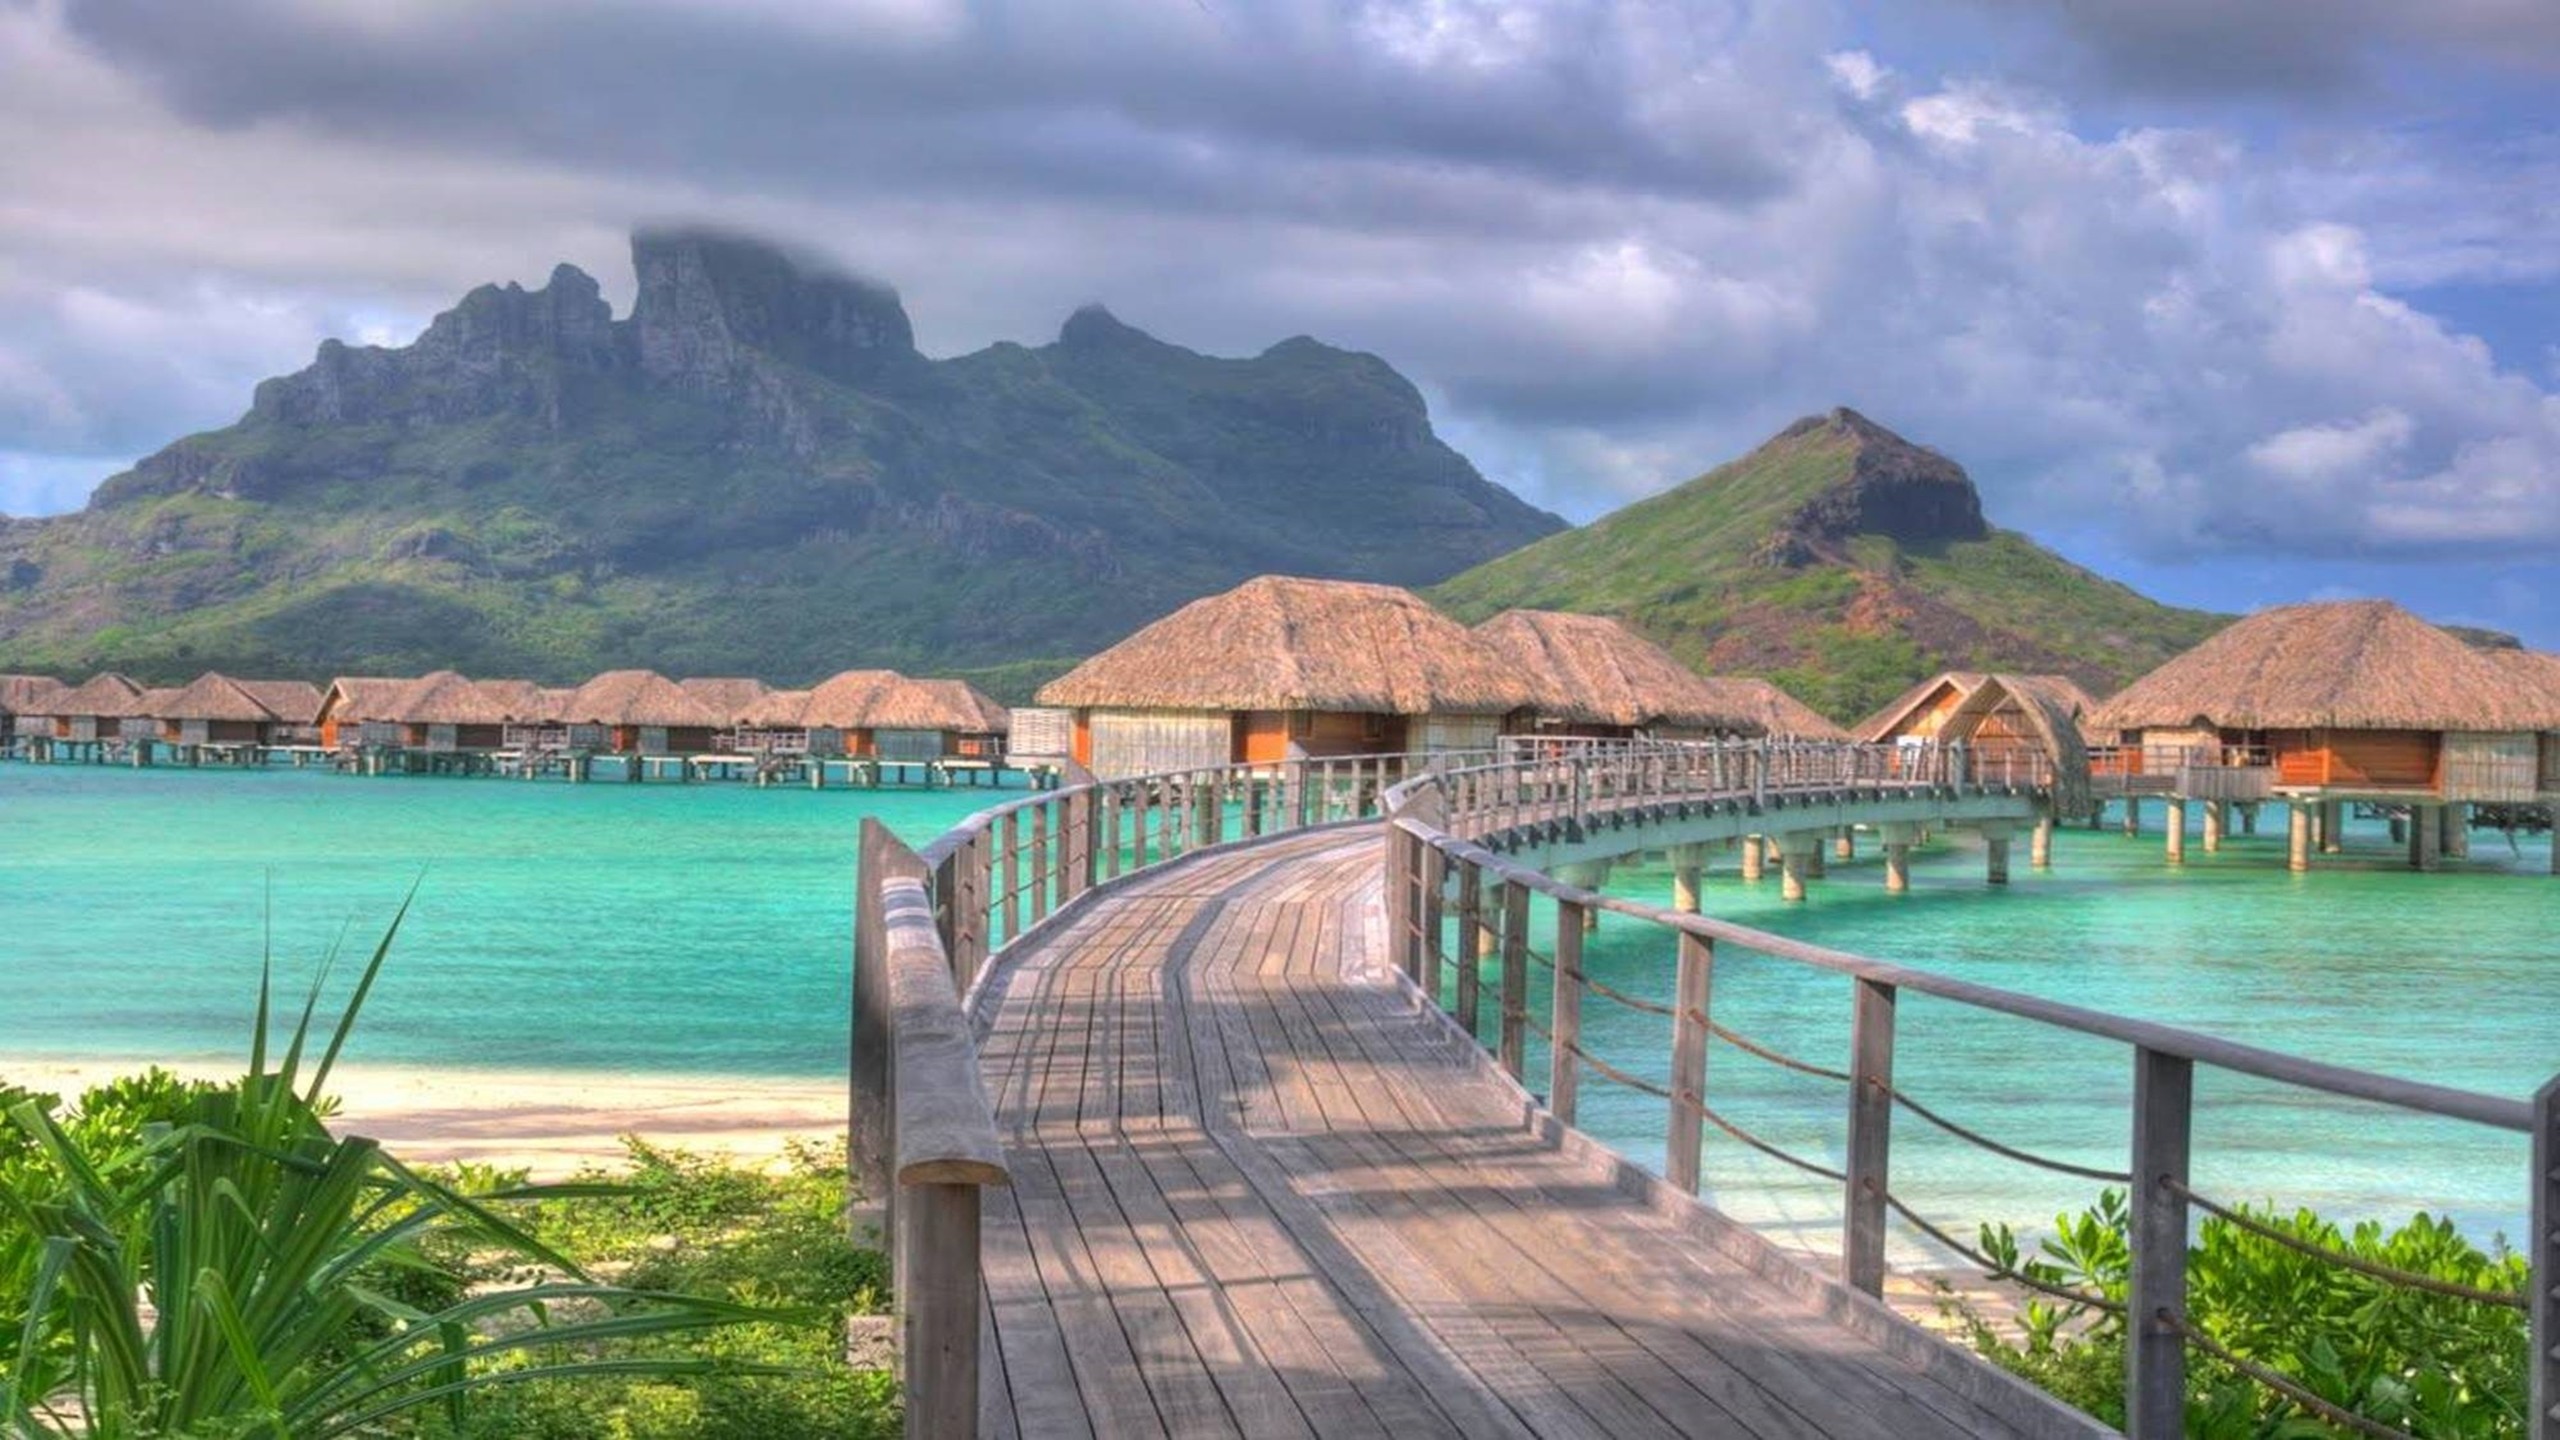 Four Seasons Resort Bora Bora South Pacific French Polynesia Desktop Background 332490 Wallpapers13.com